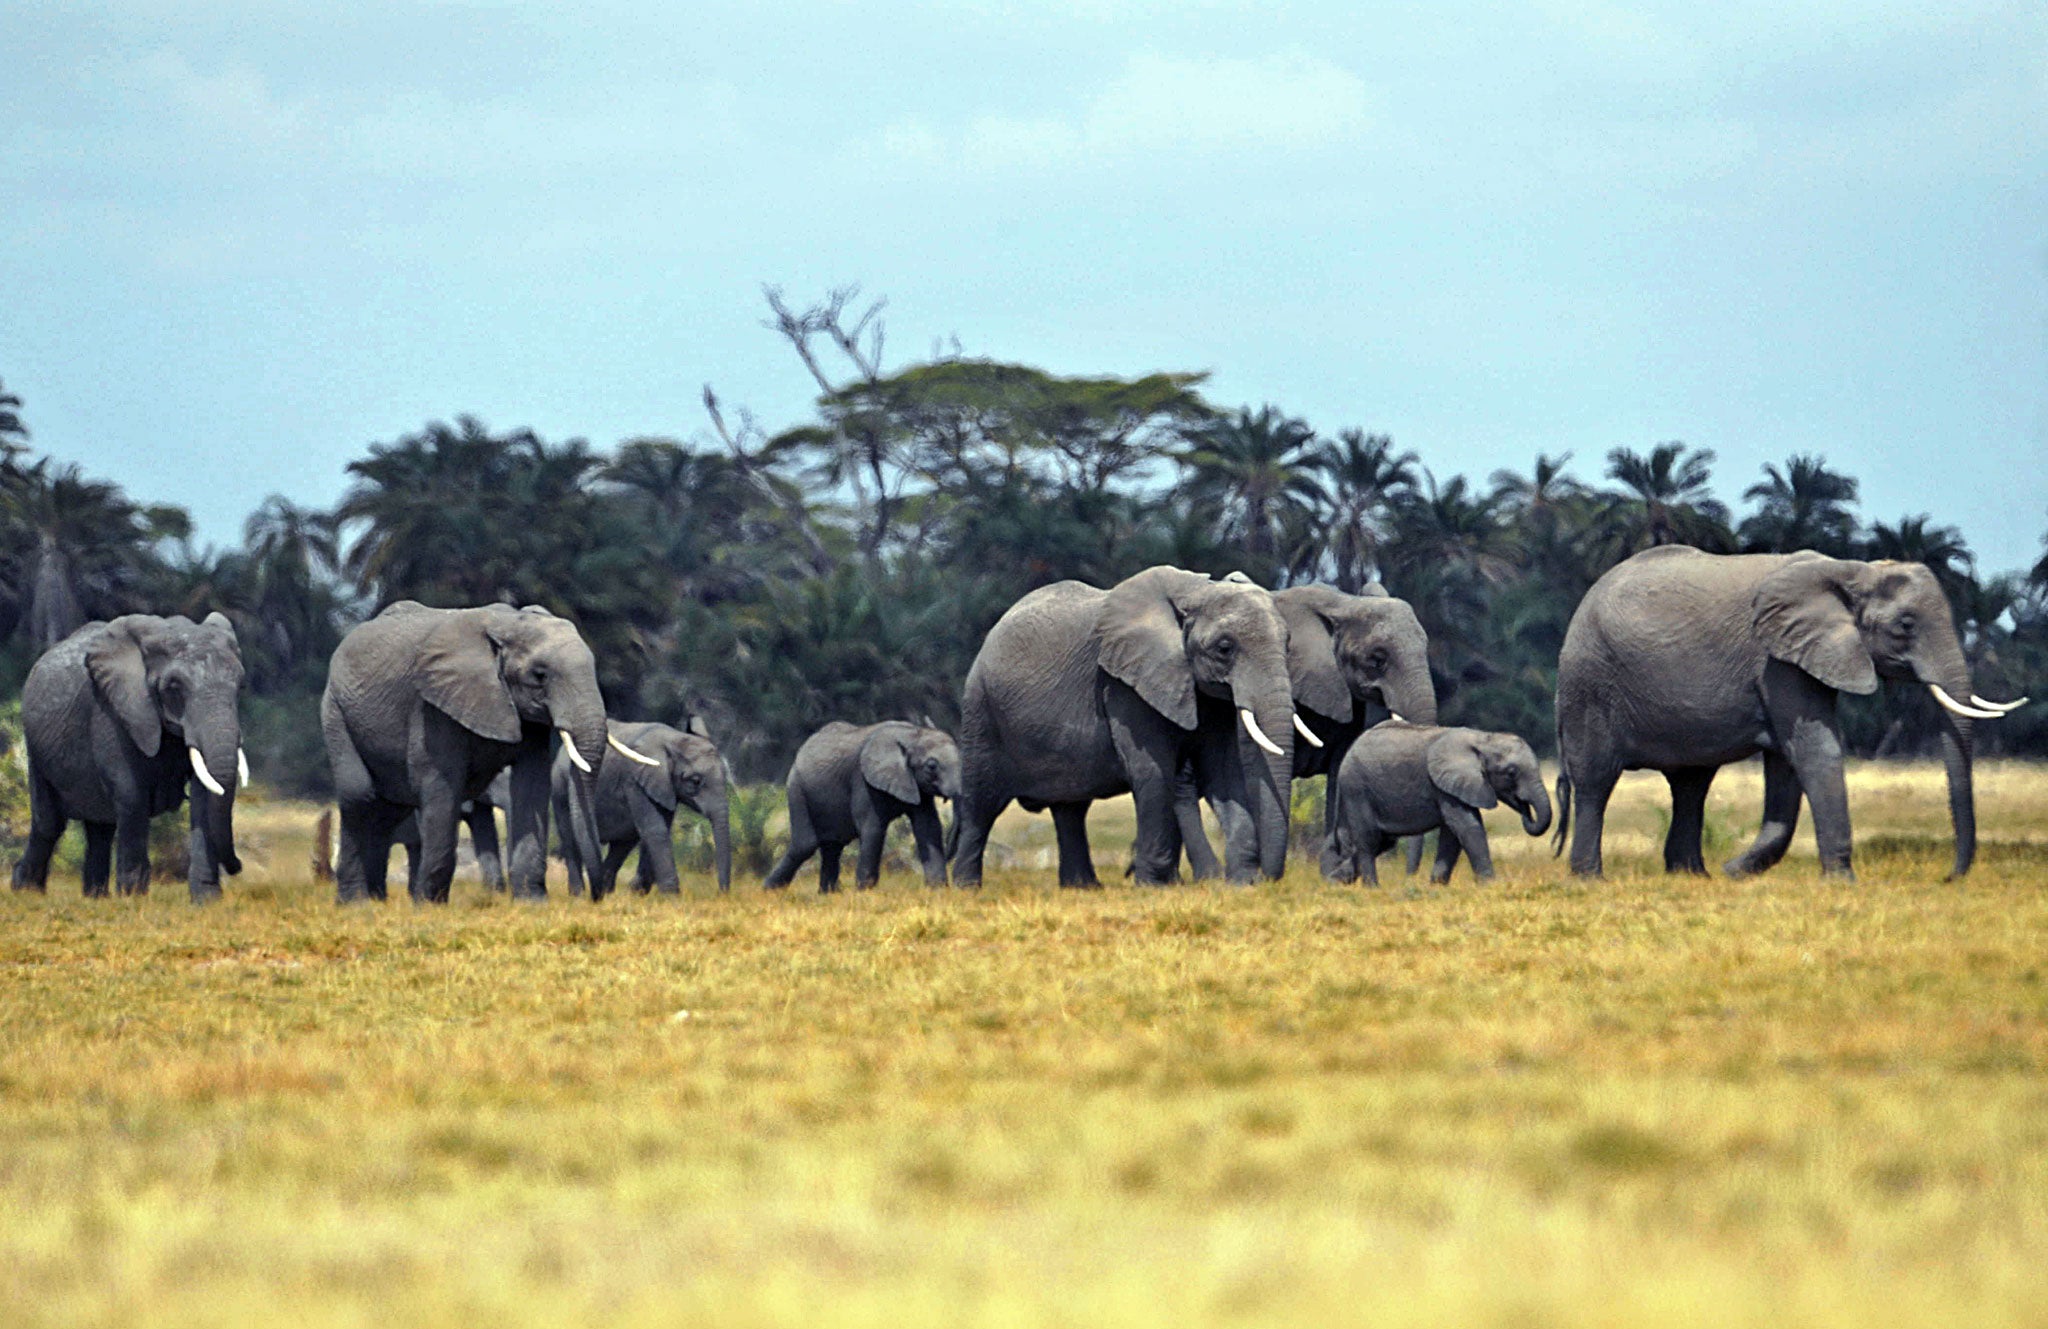 A herd of elephants in Kenya's Amboseli National Park